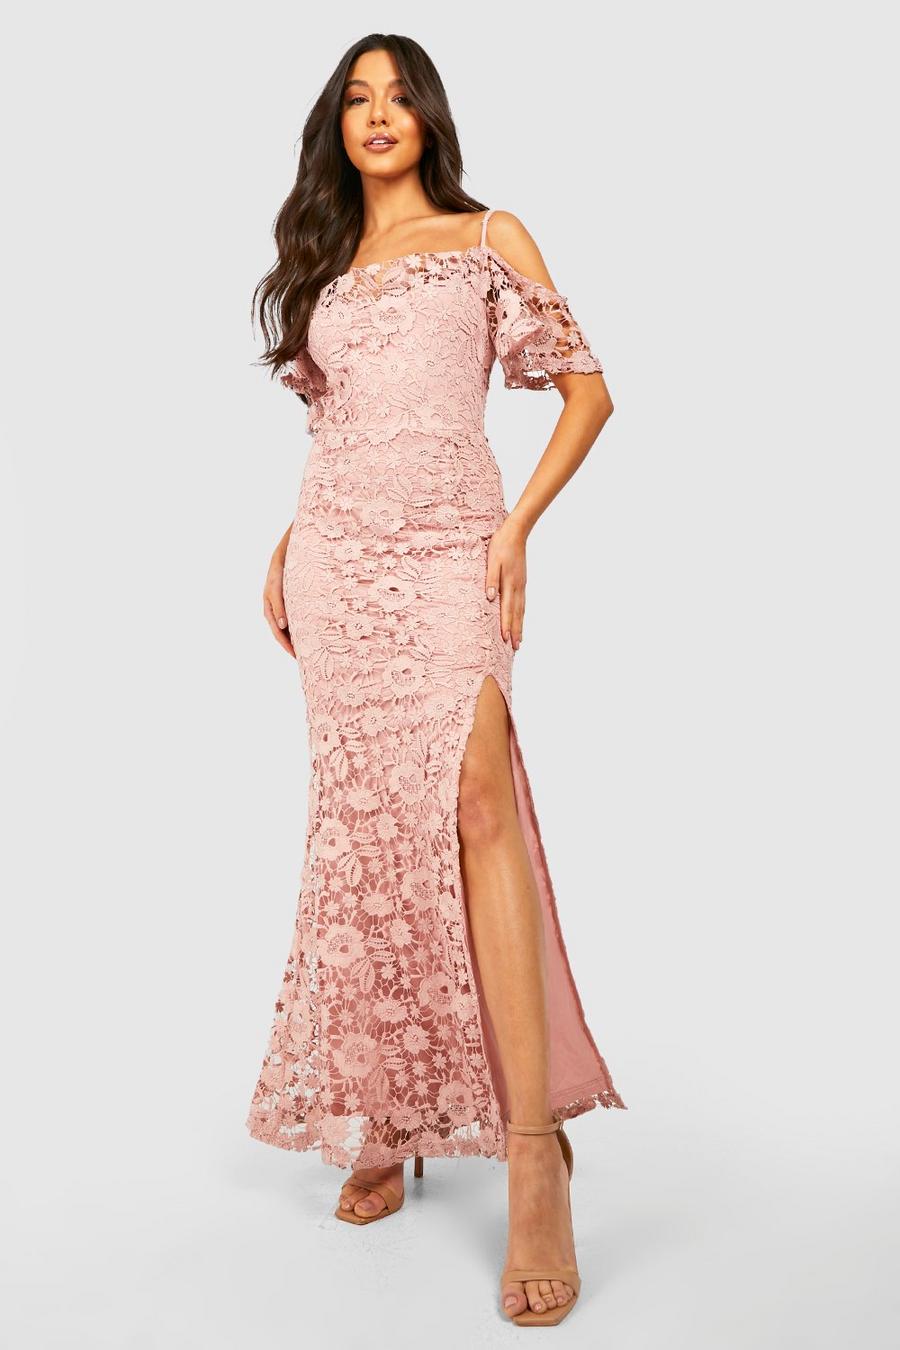 Blush pink Corded Lace Cold Shoulder Maxi Dress